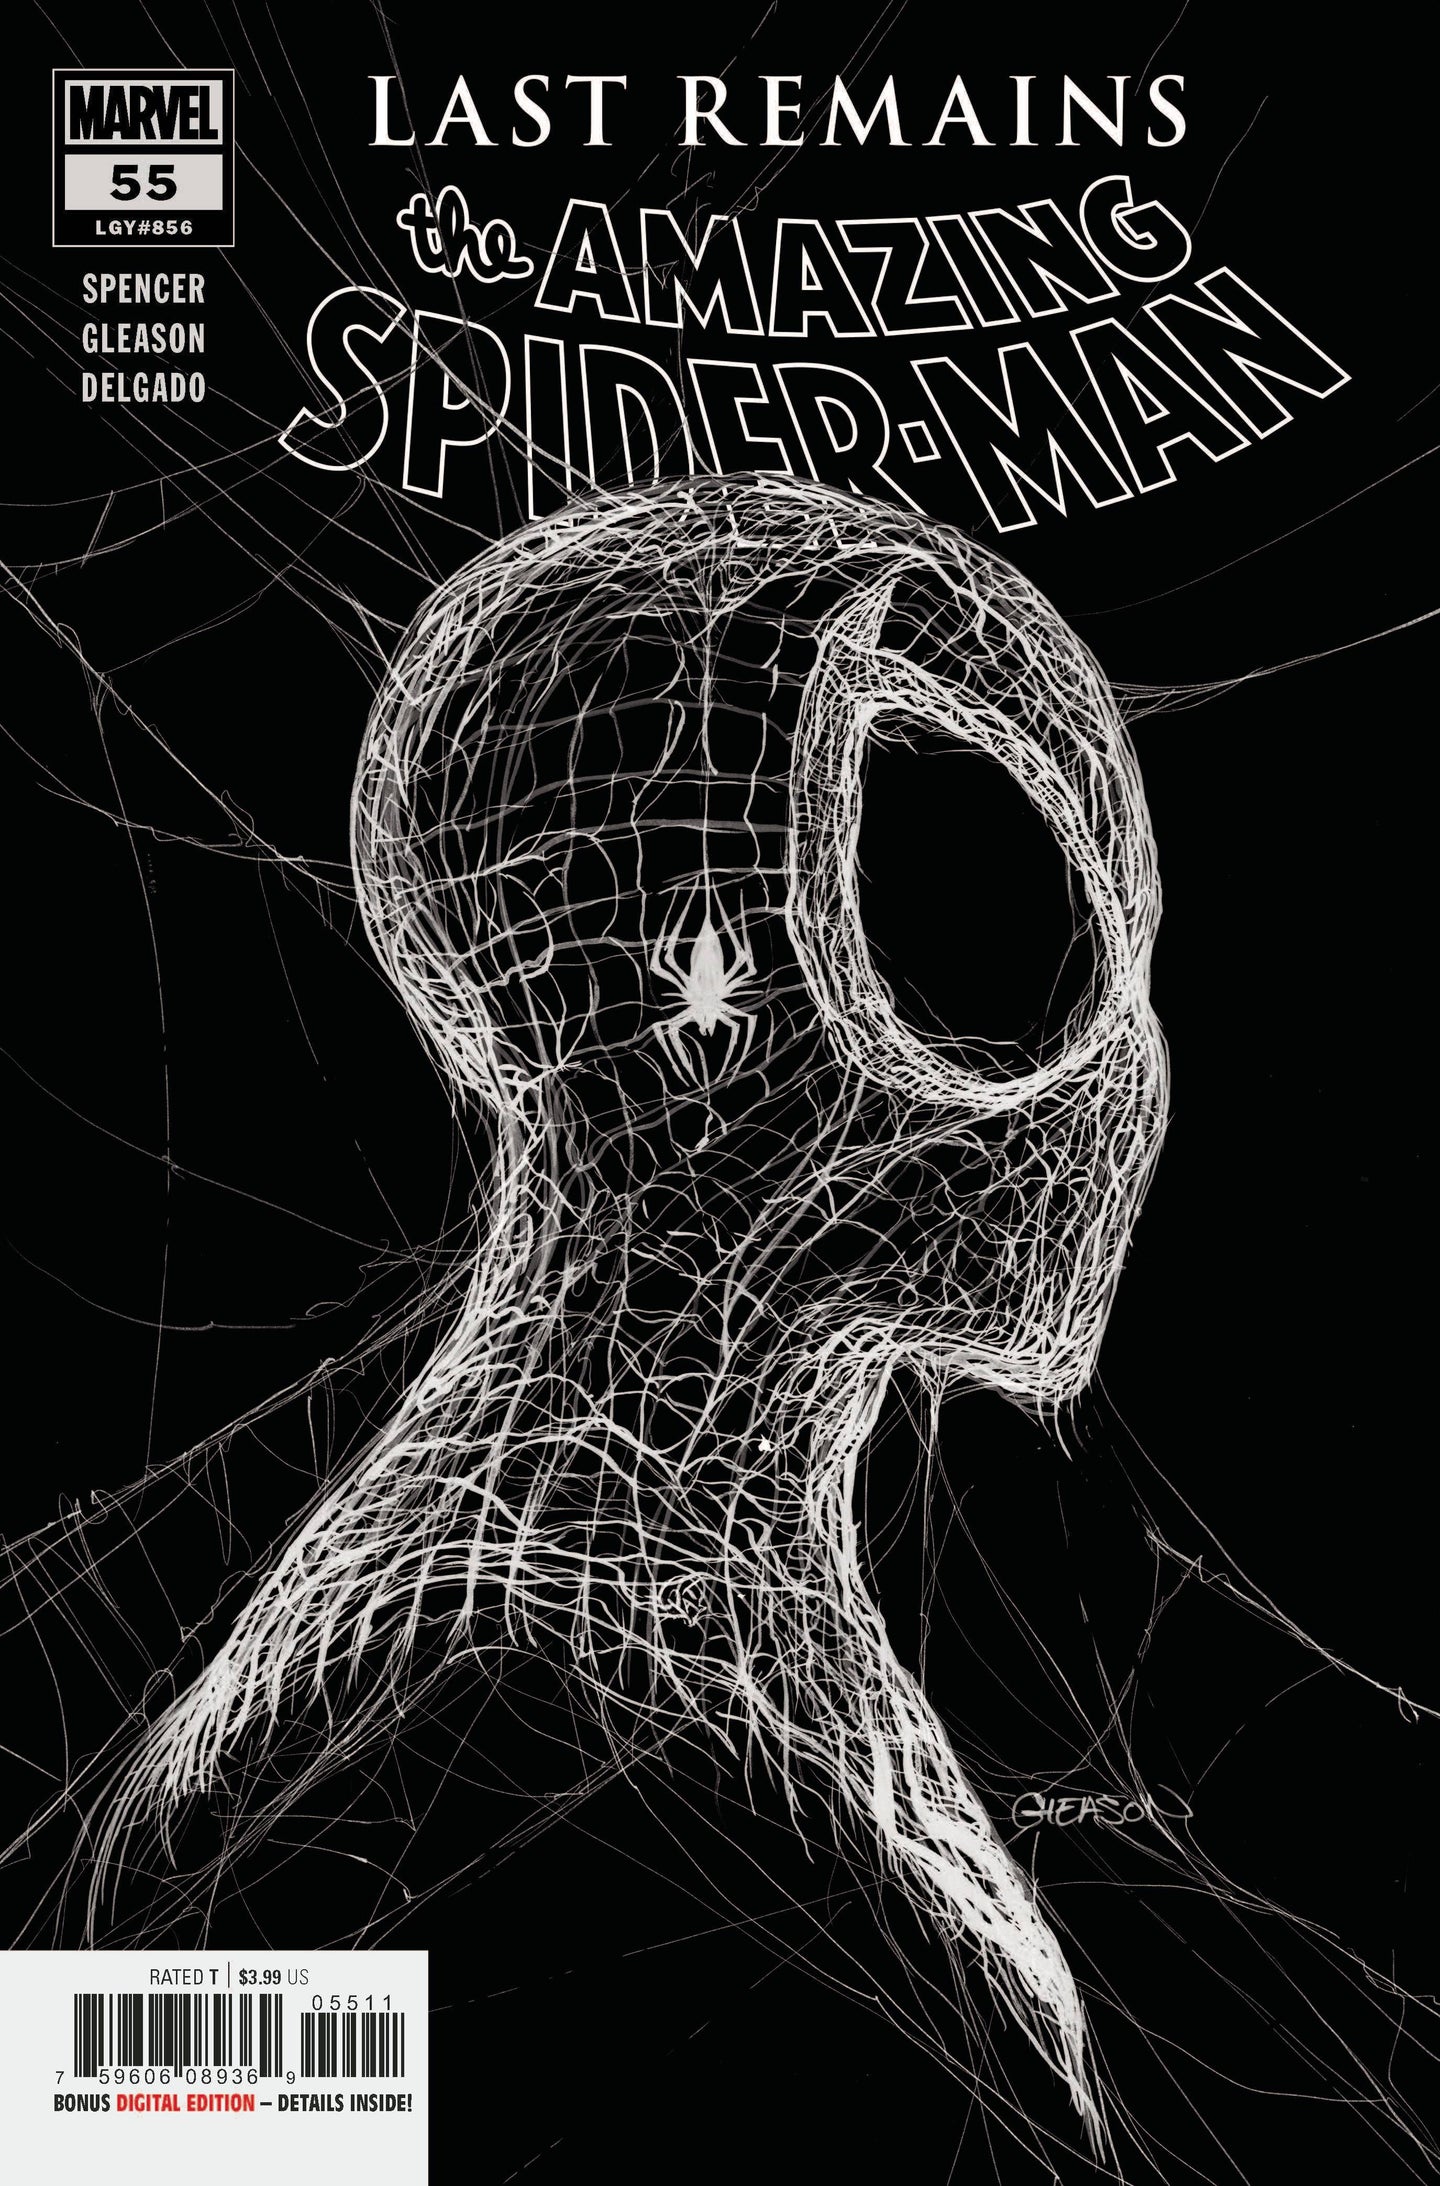 AMAZING SPIDER-MAN #55 LR First Printing